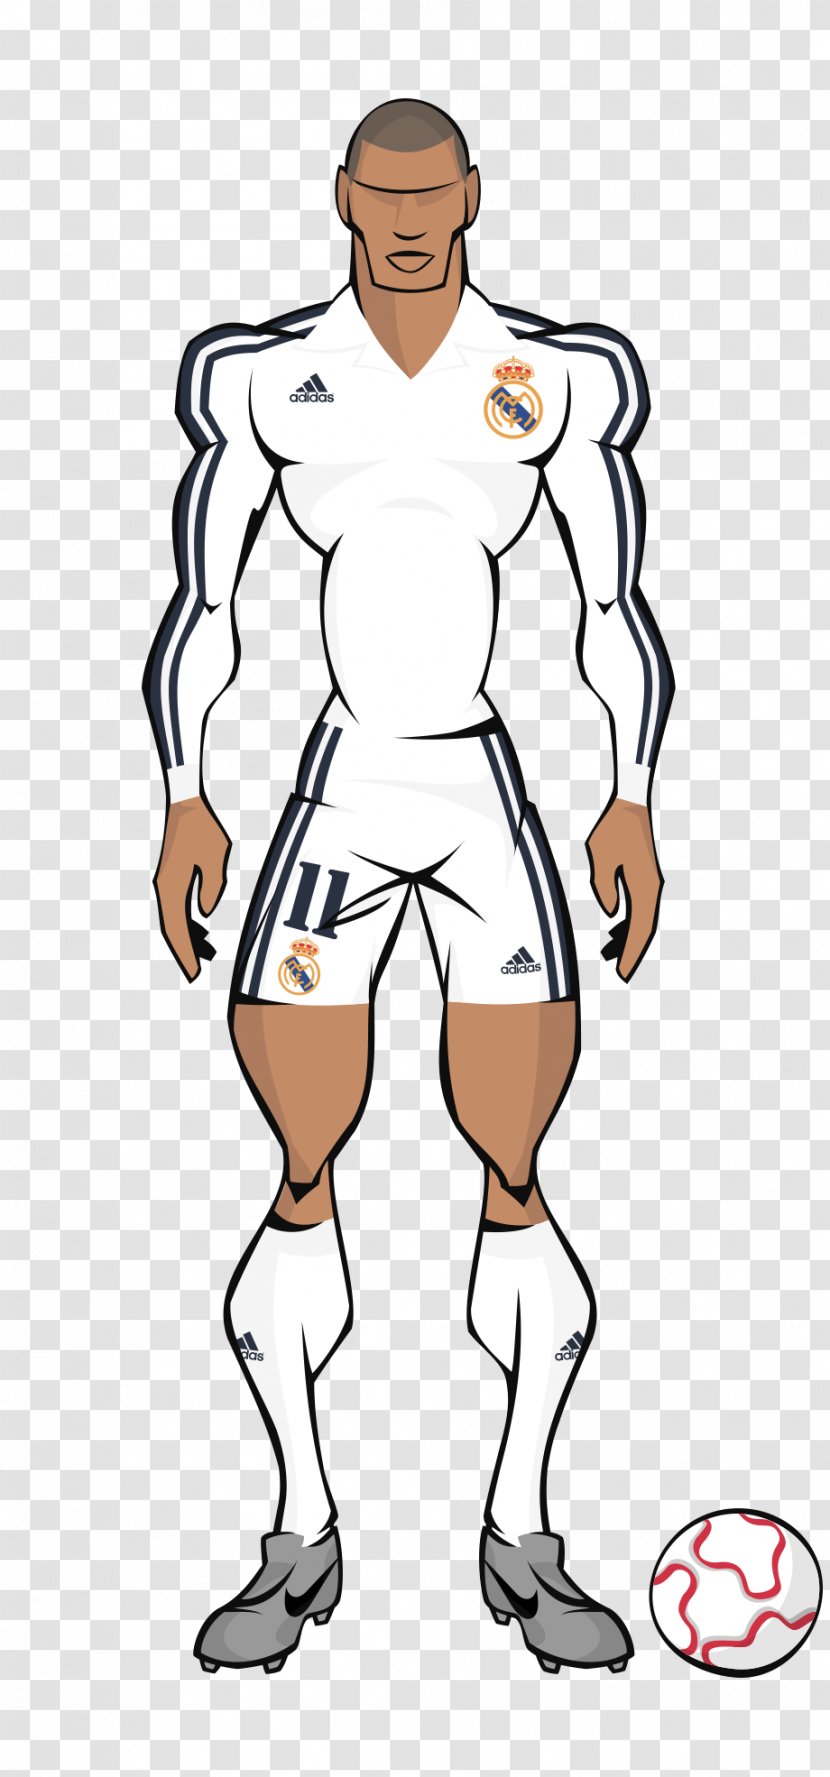 Luis Guevara Mora 1950 FIFA World Cup Brazil El Salvador National Football Team Uniform - Silhouette - Frame Transparent PNG